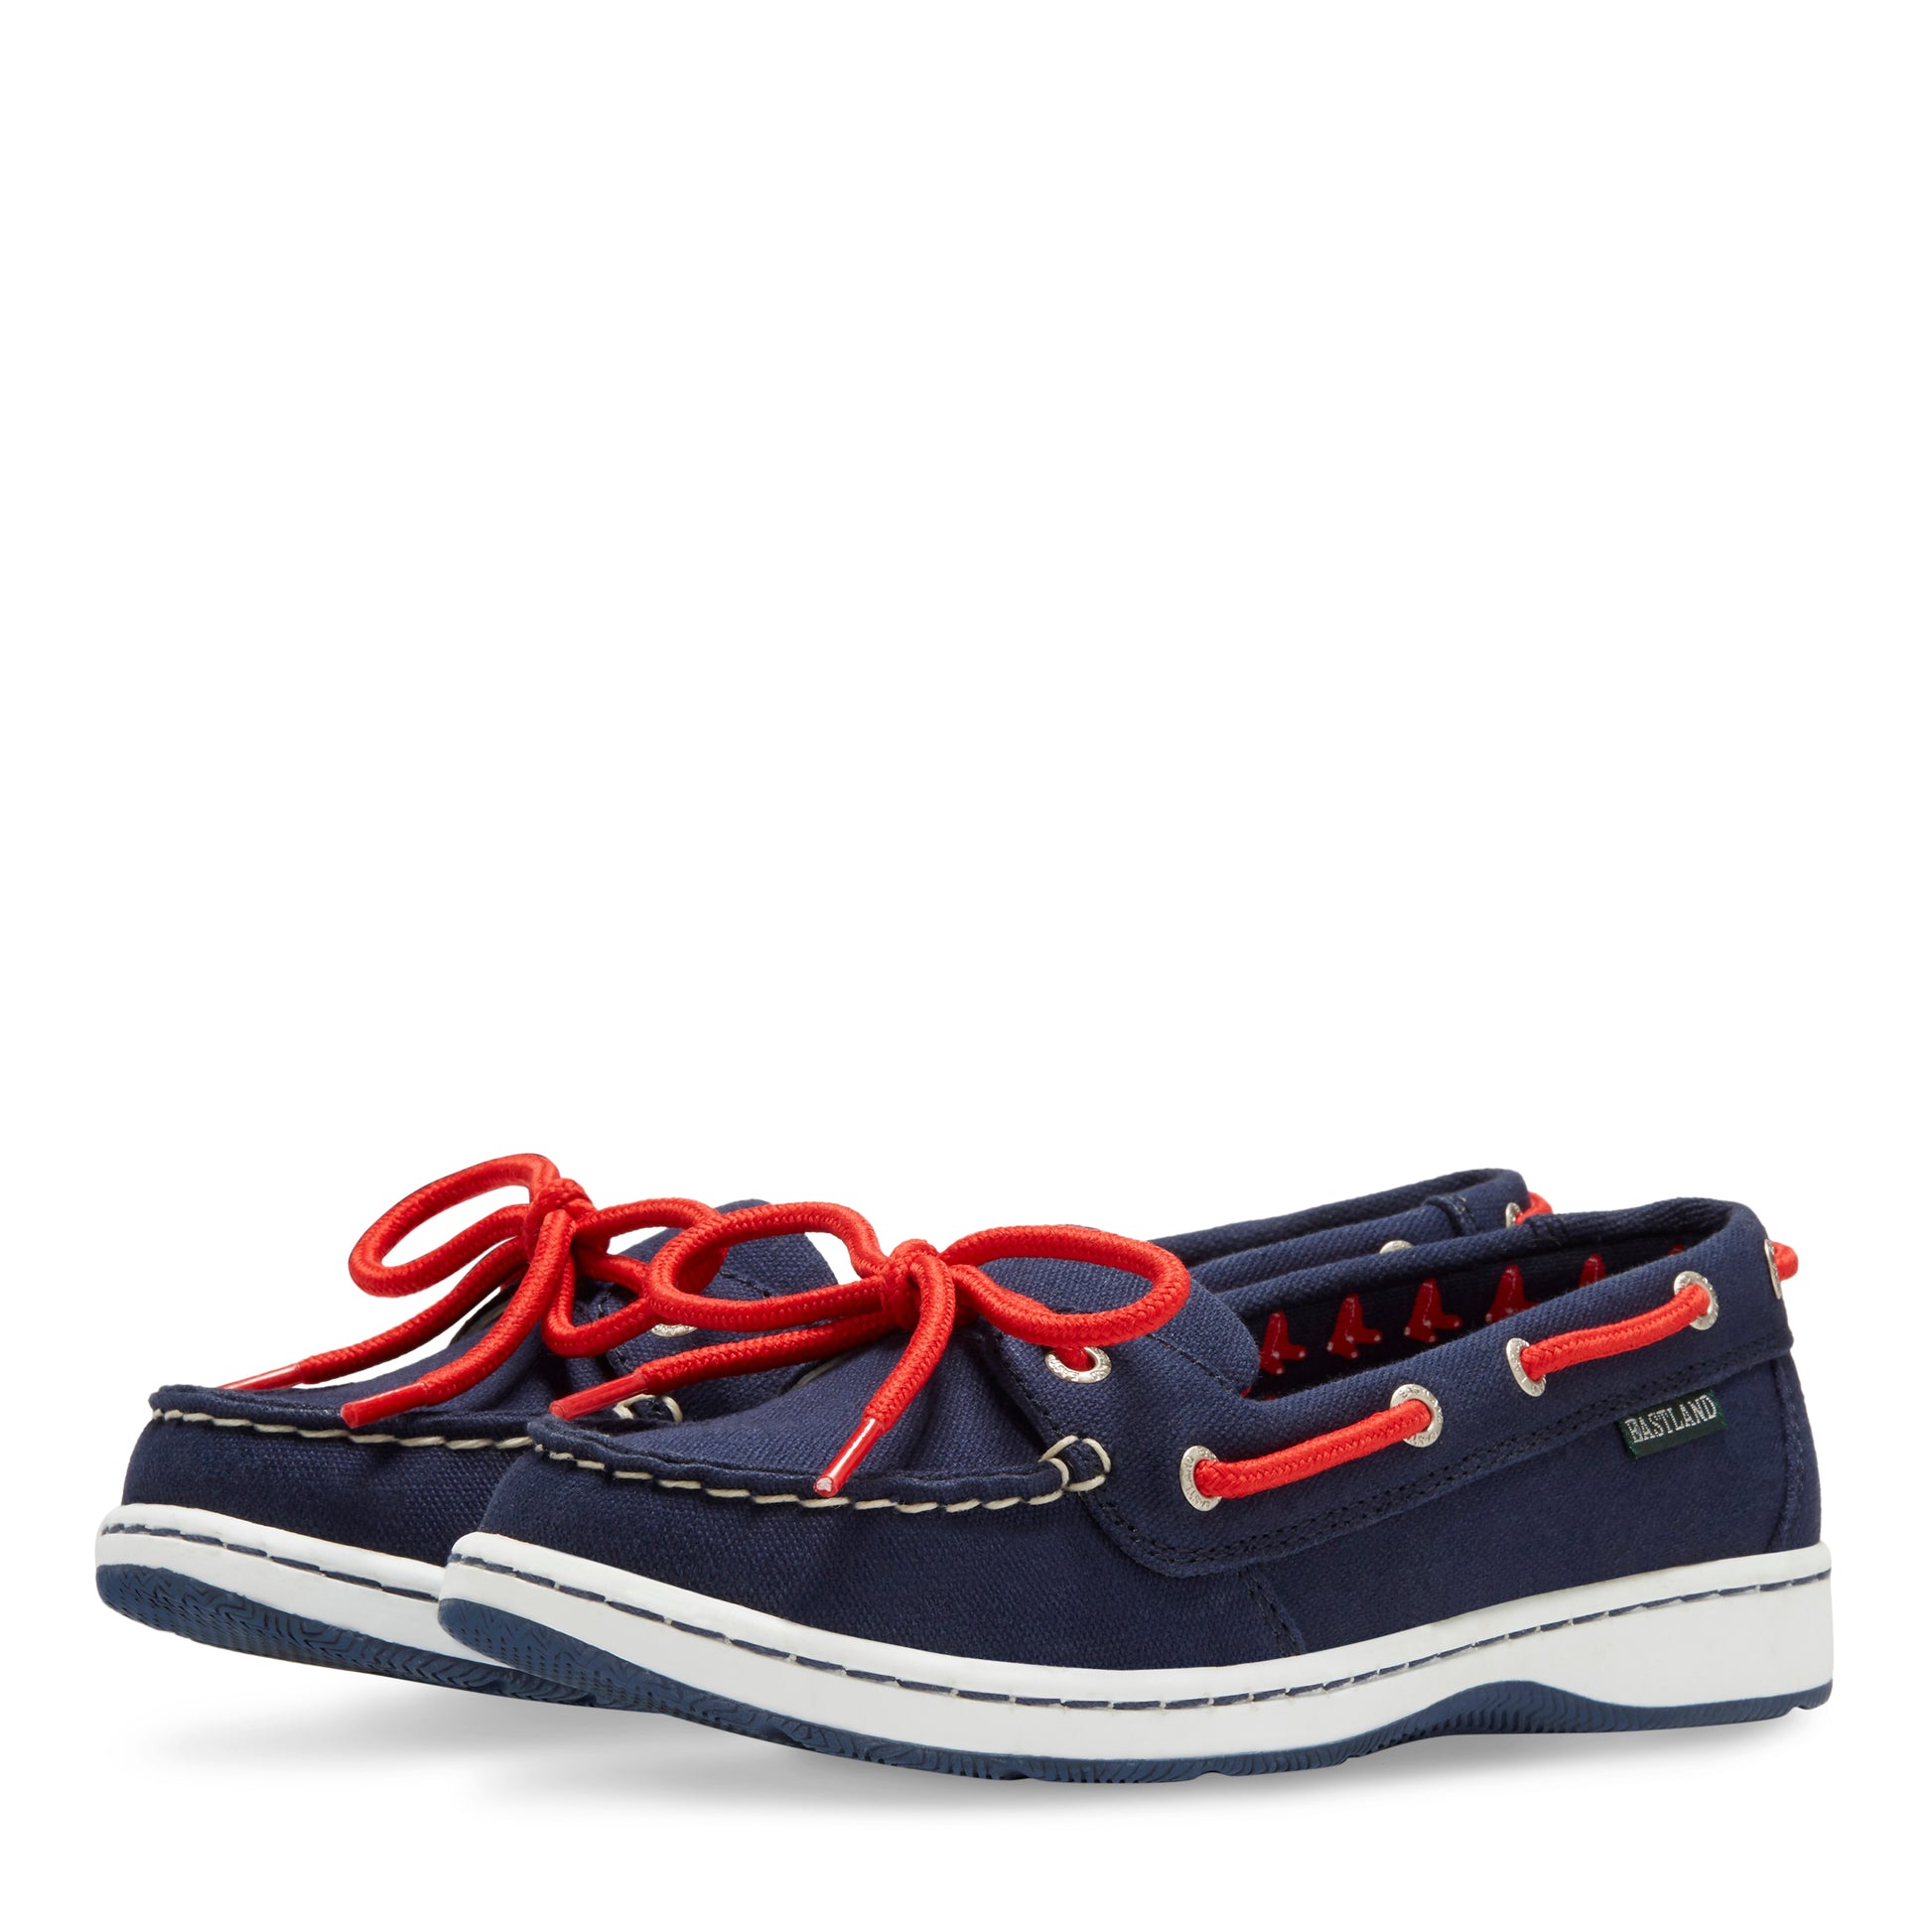 Sanuk Boat Shoes Womens Red Blue Patriotic American Flag Comfort